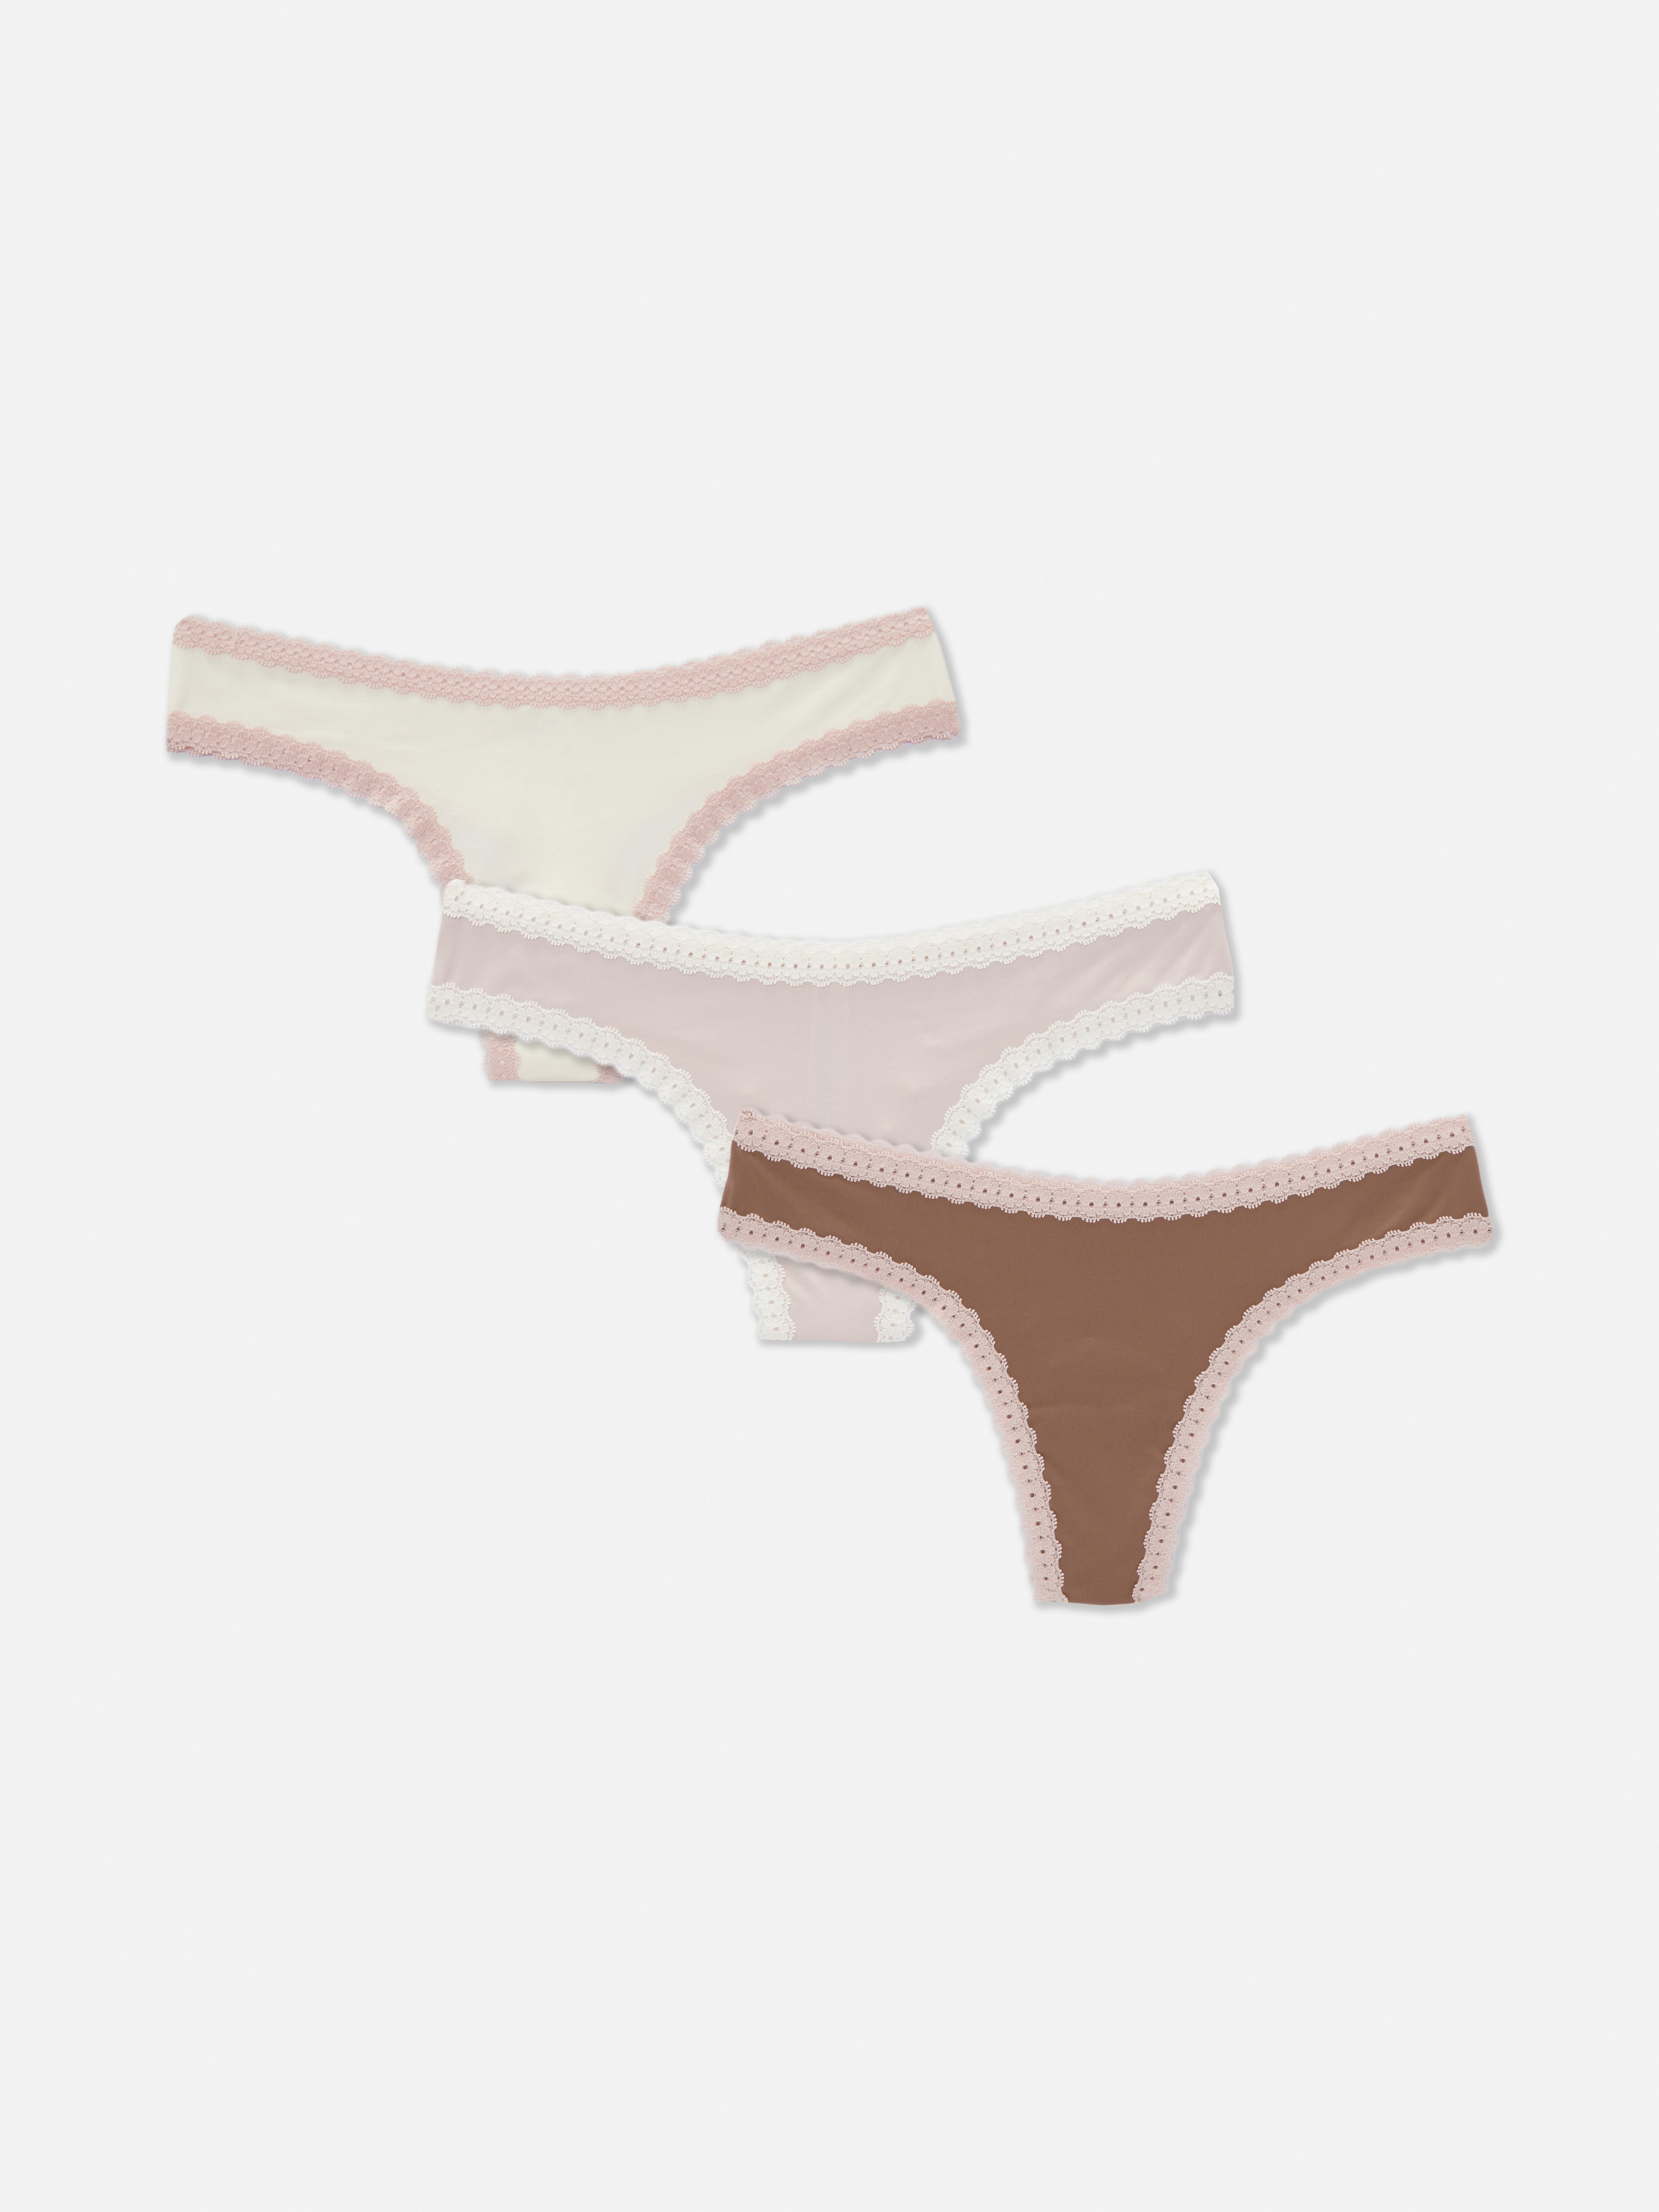 Women's Brief 36 38 S Thong Brazilian Panty Pink ❤️ Heart Sexy Primark